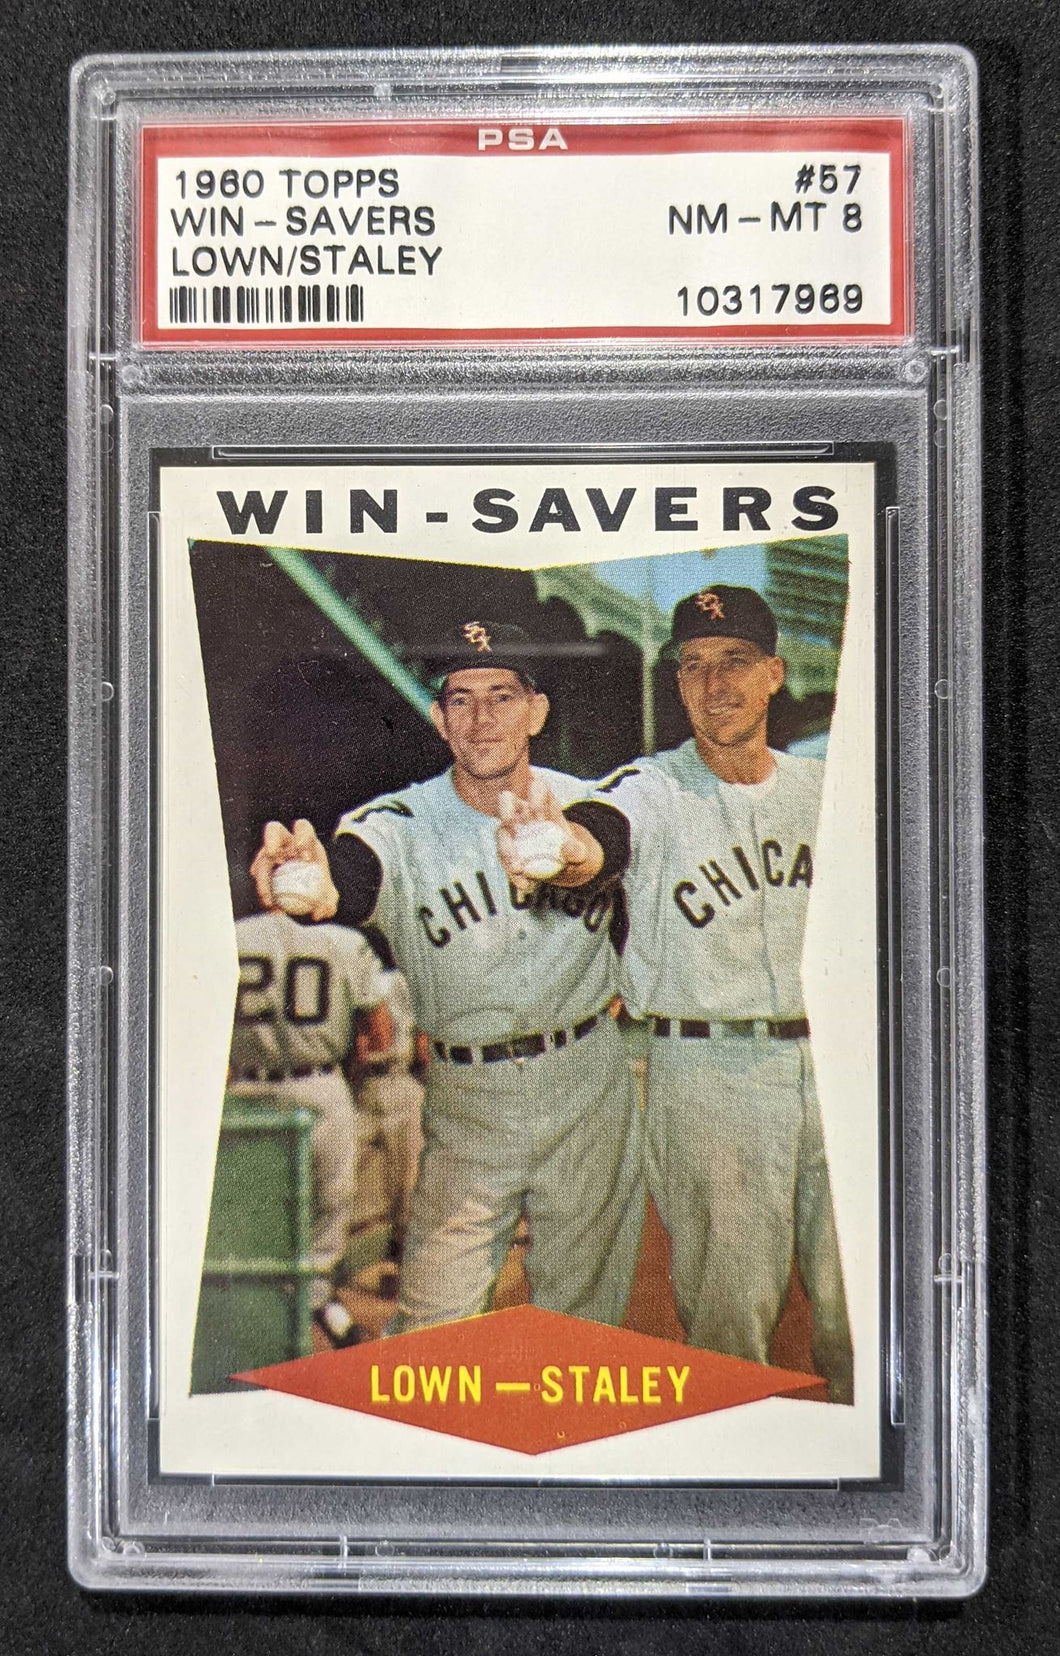 1960 Topps Win-Savers Lown/Staley #57 PSA NM-MT 8, 10317969